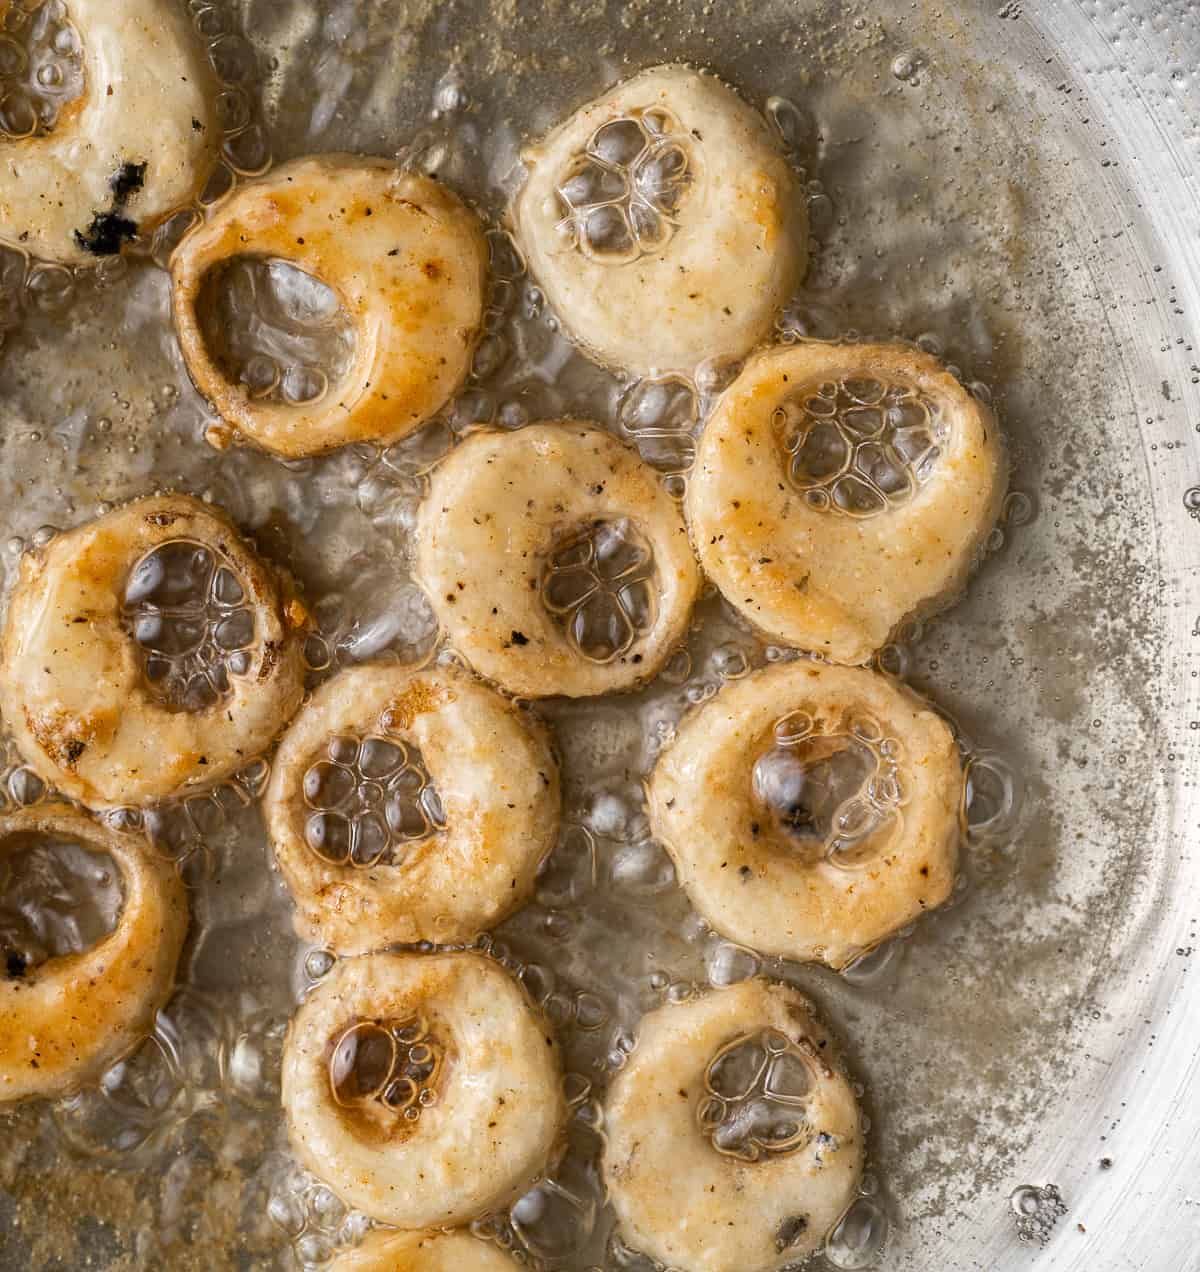 calamari rings being deep fried in oil.